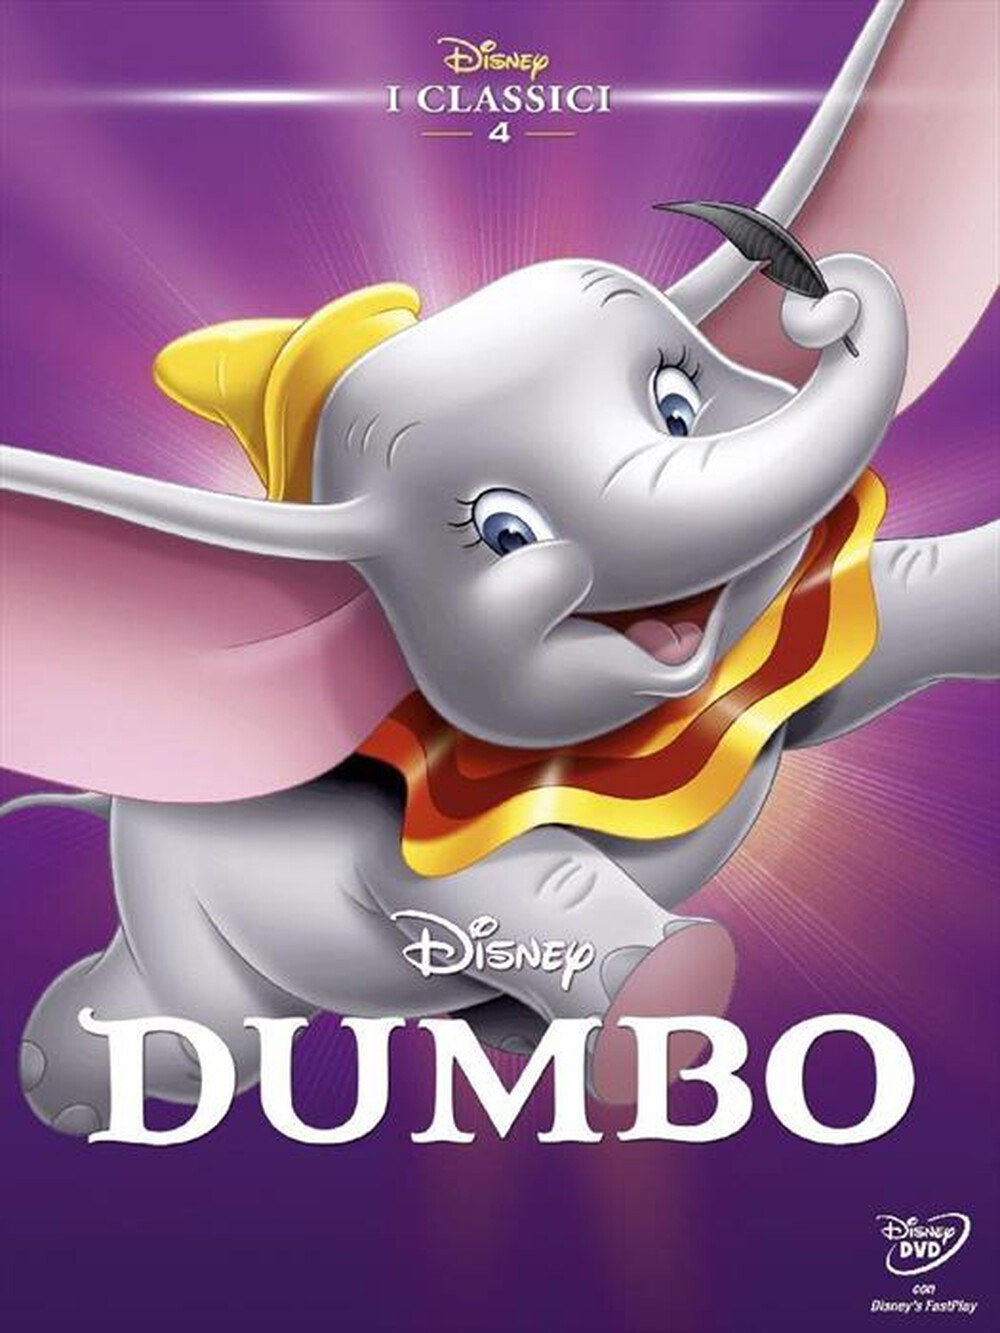 "WALT DISNEY - Dumbo - "